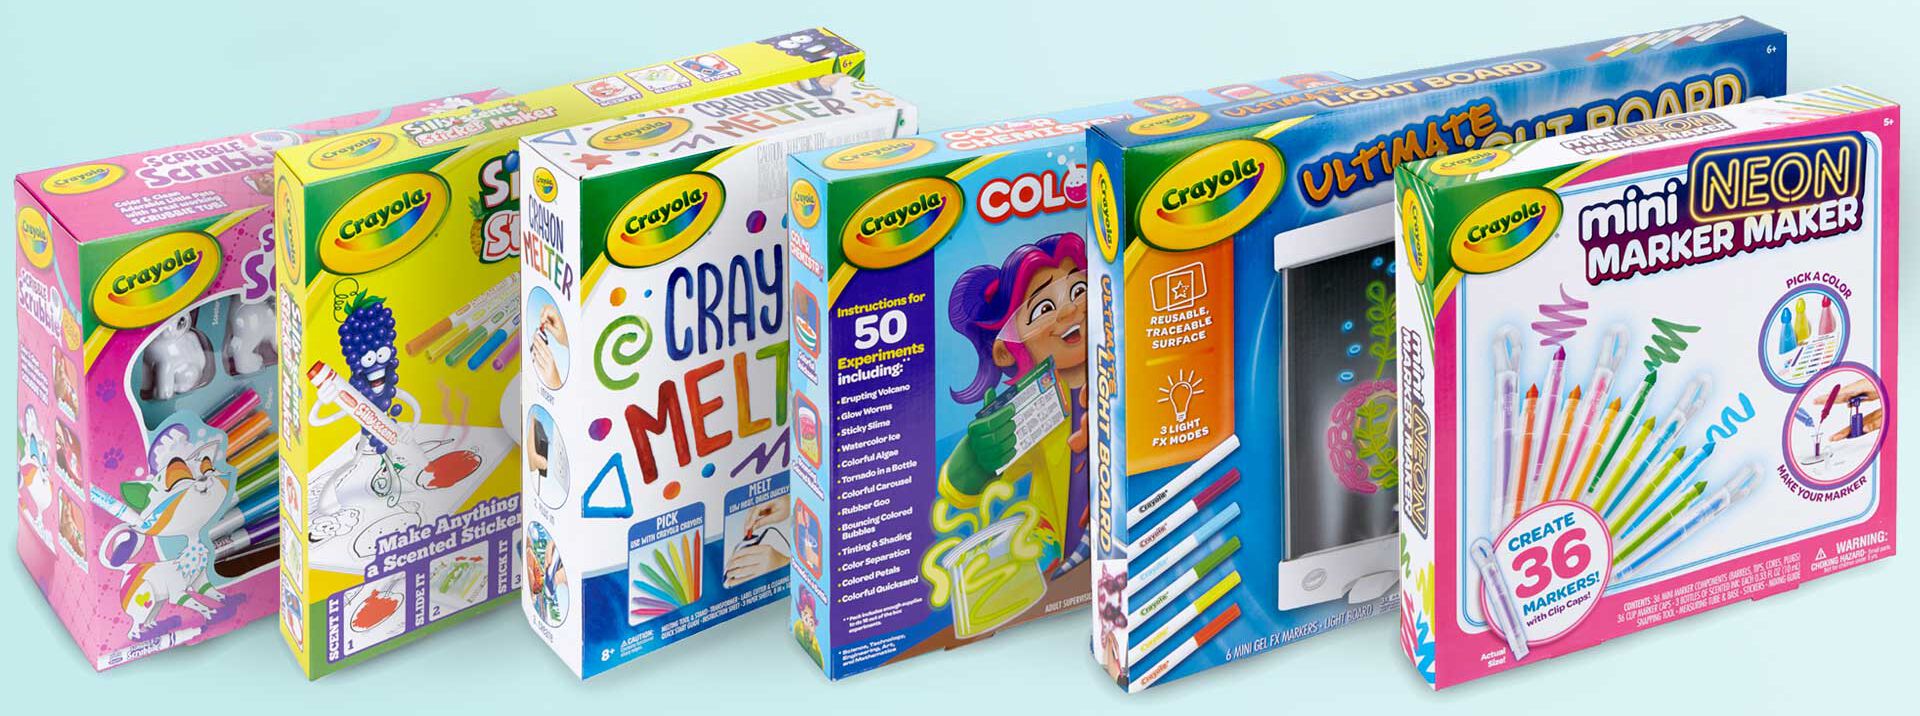 Download Crayola Toys & Activities for Kids | Crayola.com | Crayola